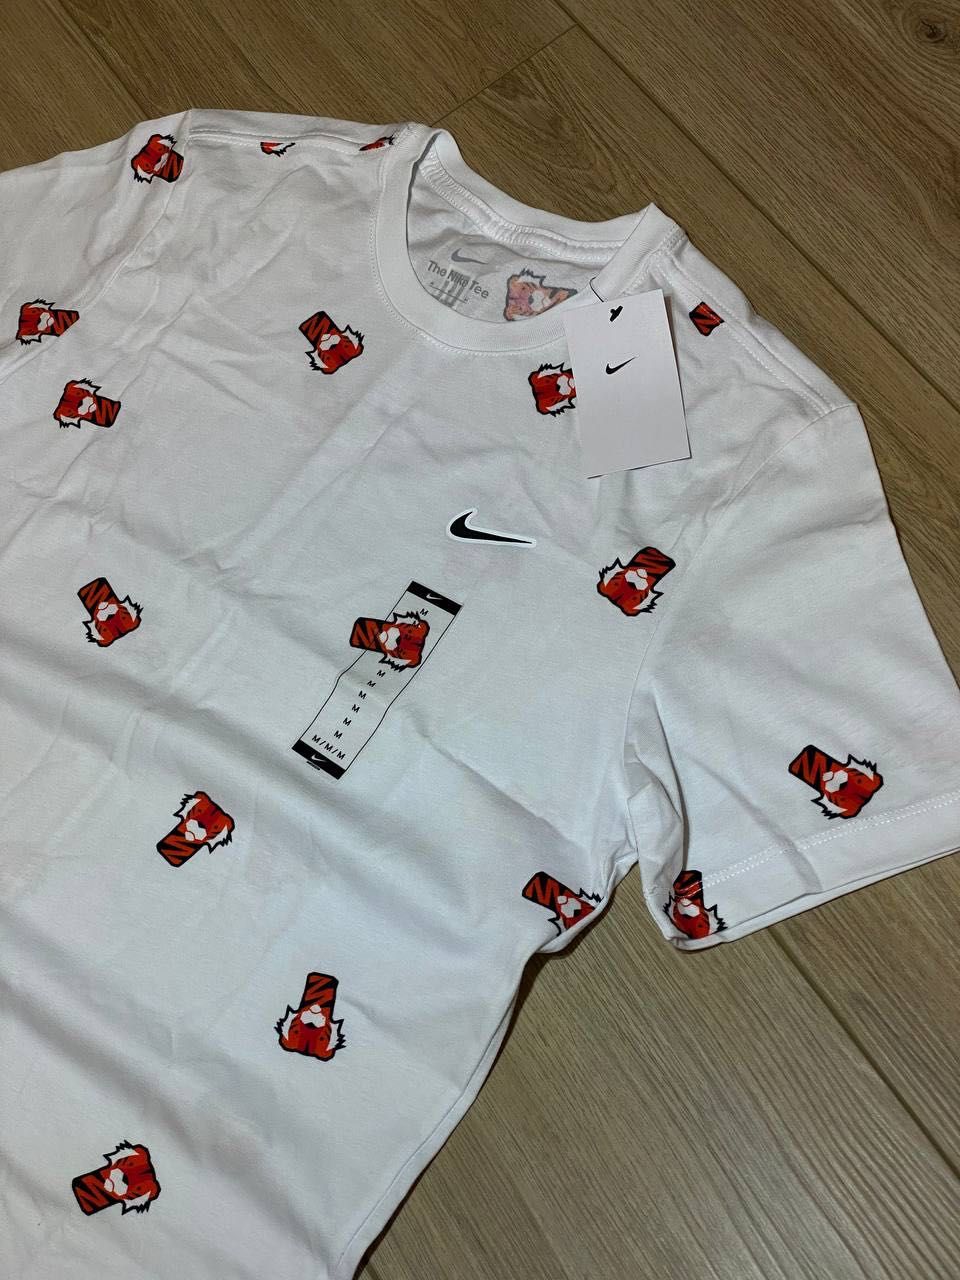 Nike Tee T Shirt S,M,L